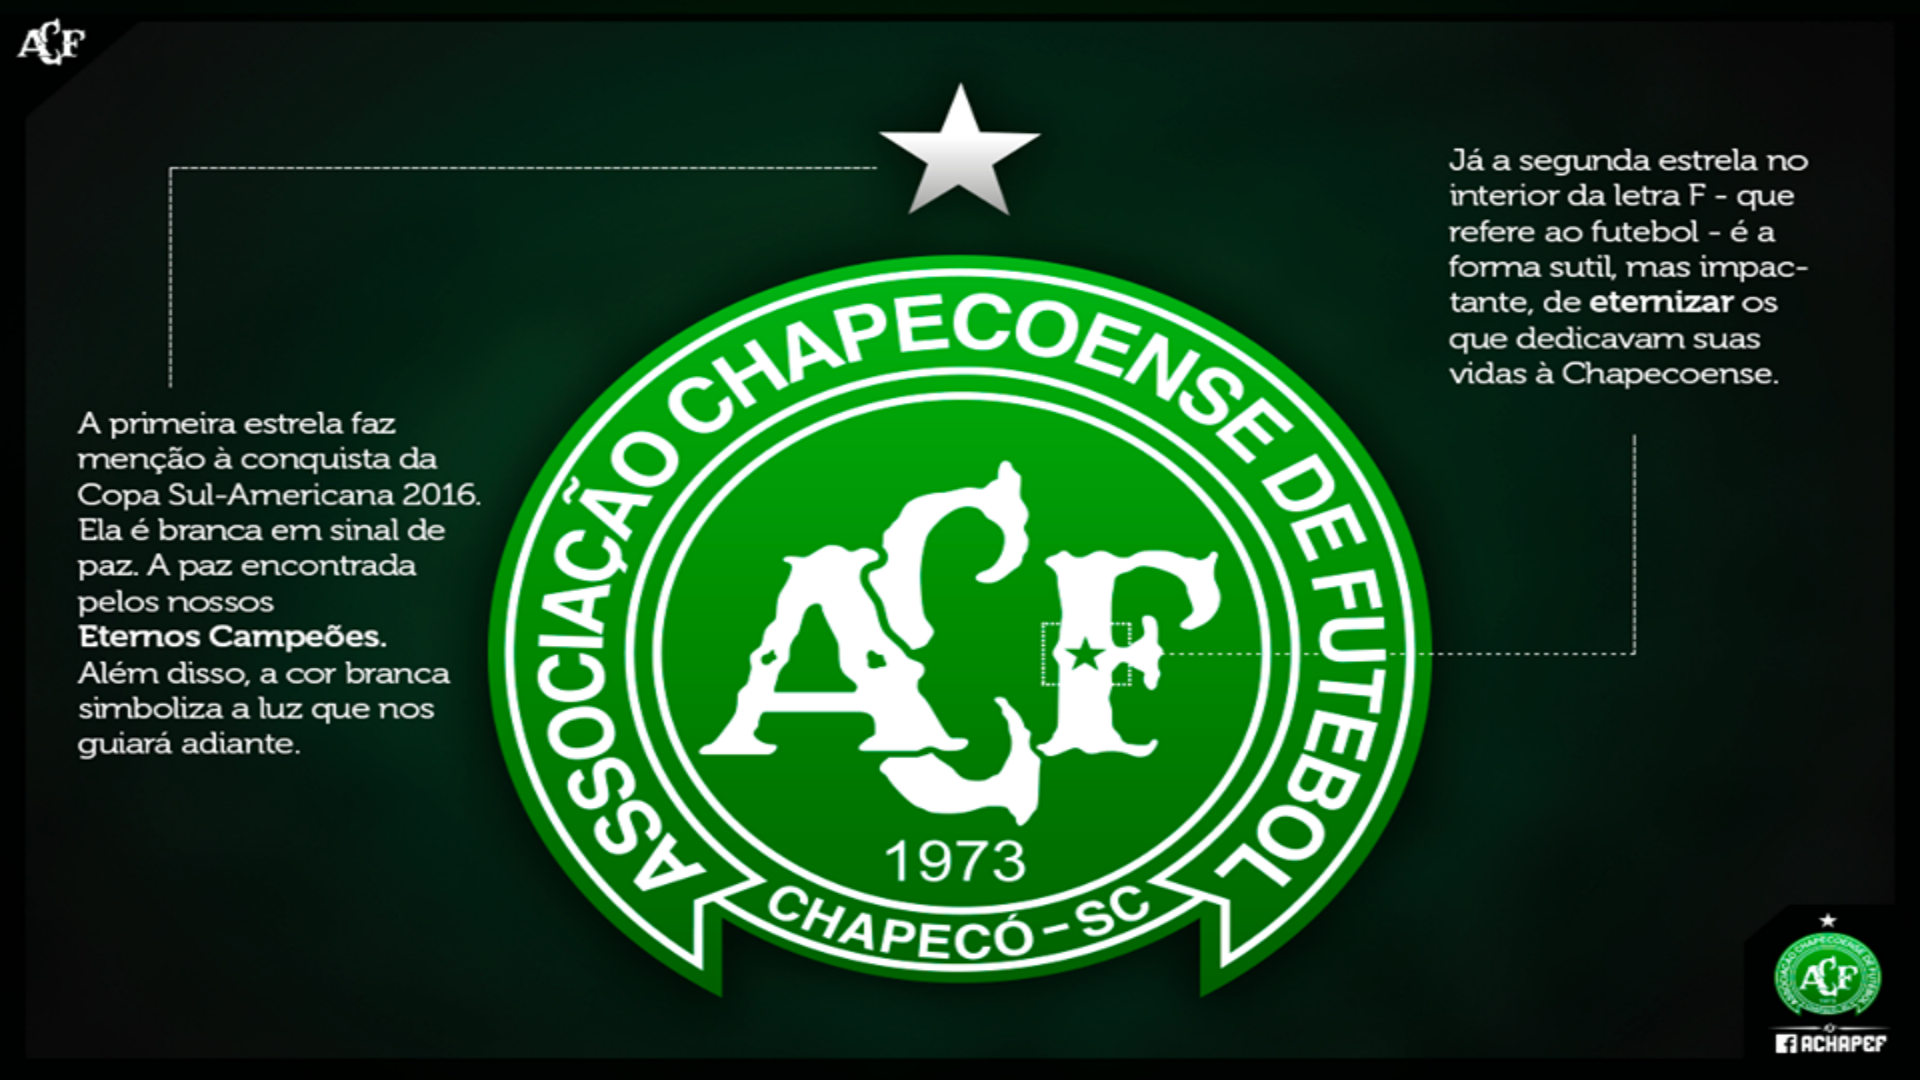 novo-escudo-chapecoense-08-12-2016_1ottmgesev0621bcdt093ou7lb